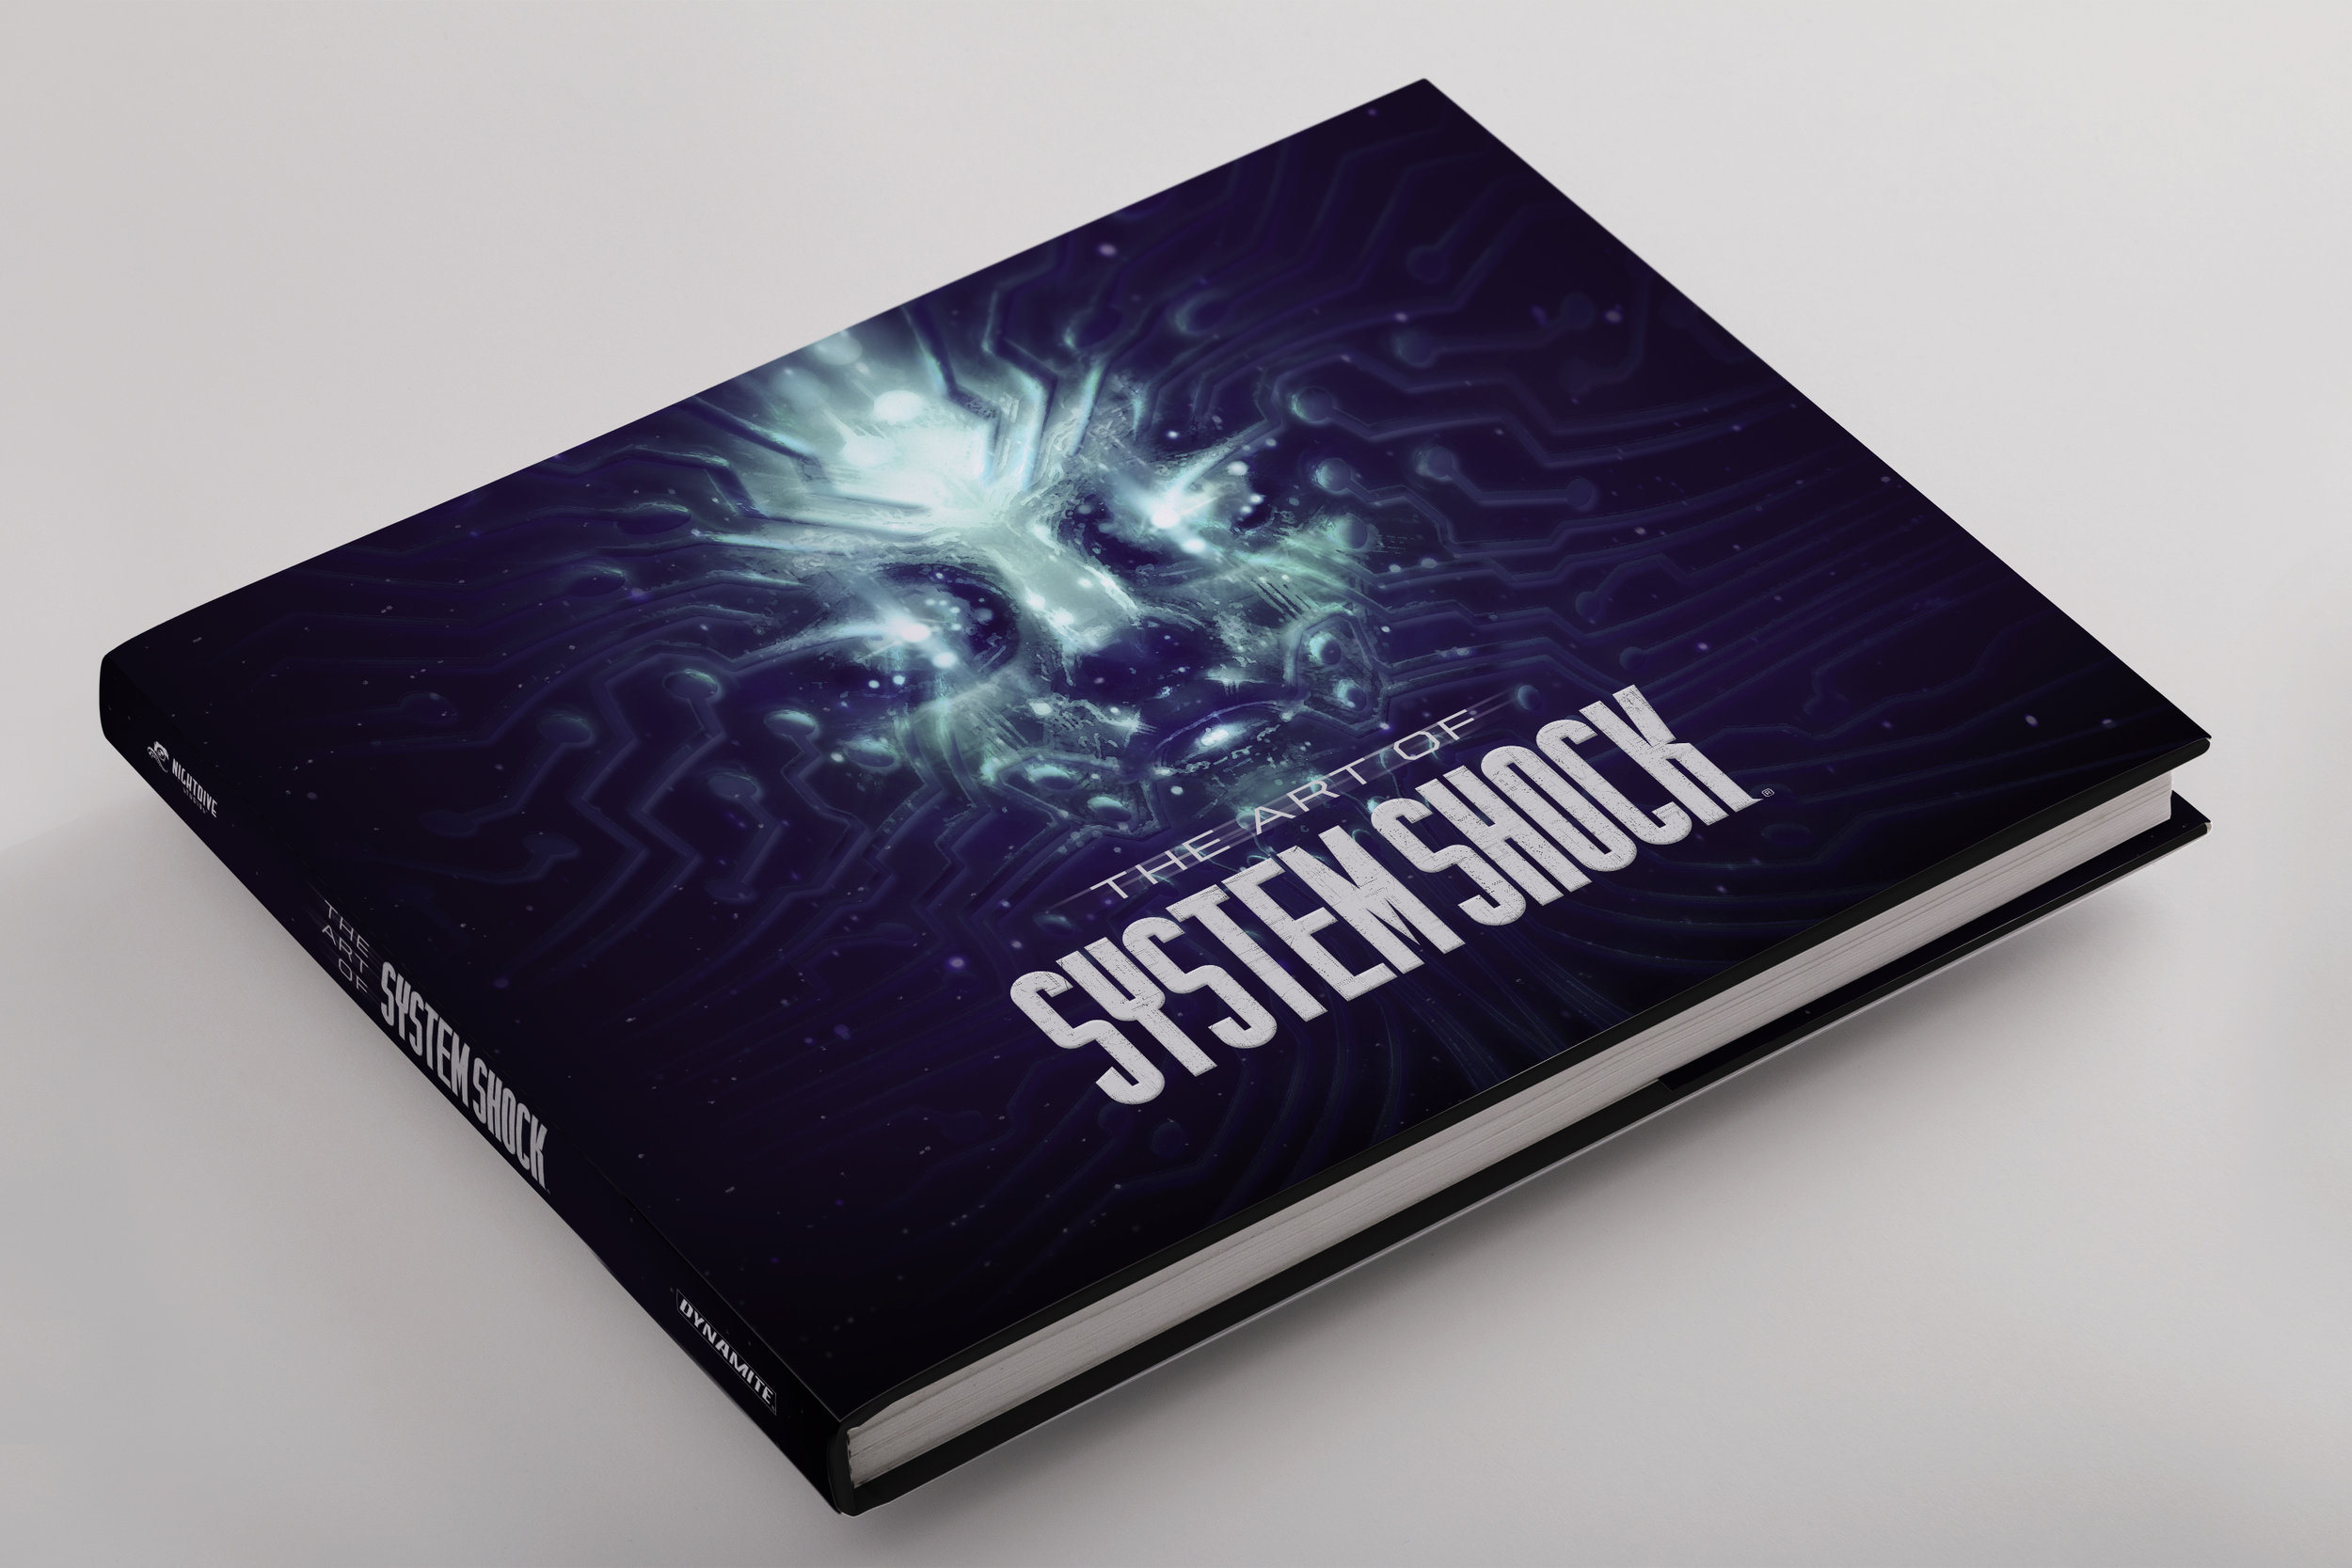 Книга here. System Shock artbook. System Shock обложка. Neverwas книга. Blu-ray. Погружение + артбук.